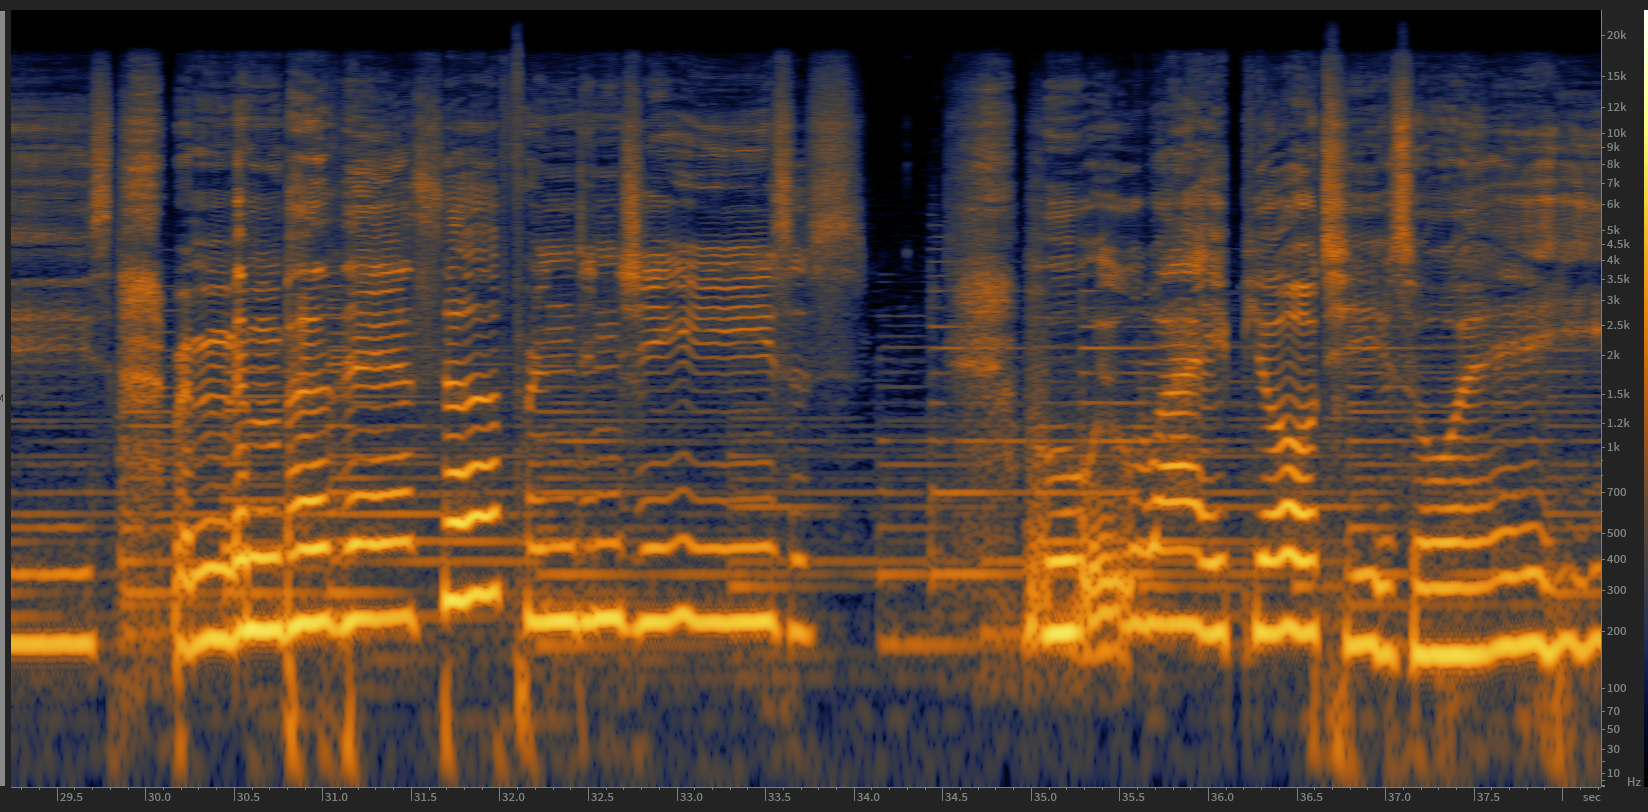 Vocal spectra